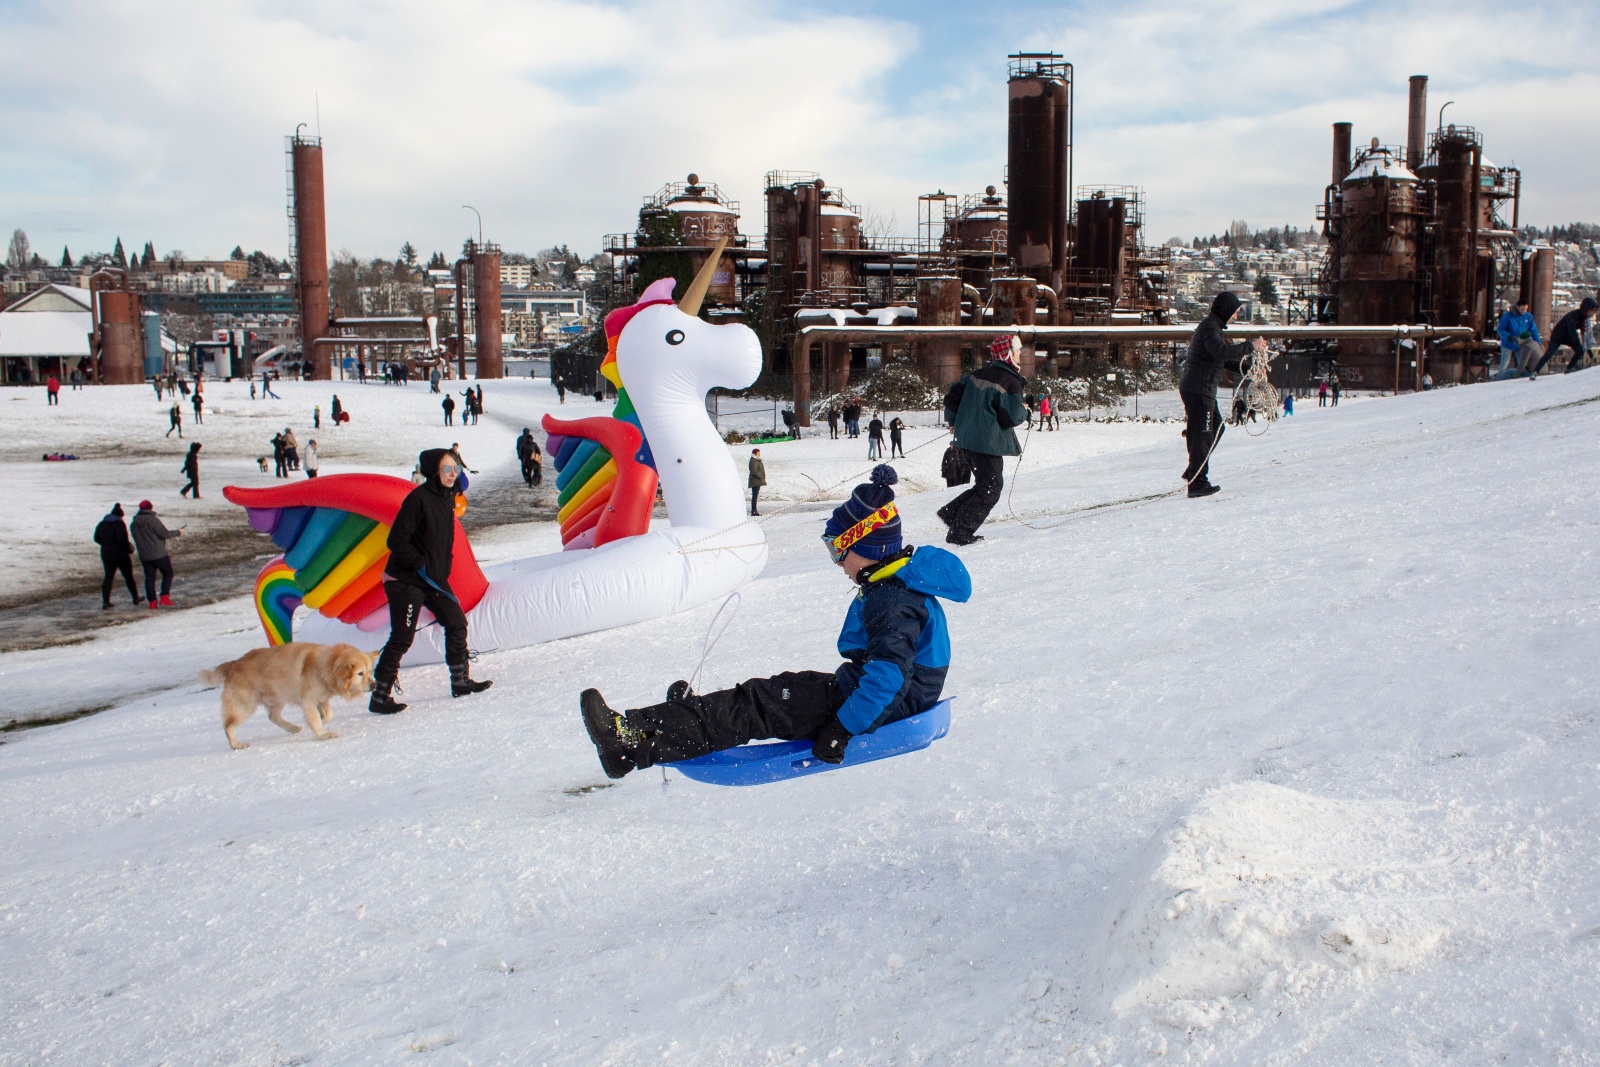 Kids sled down a snowy hill near an industrial factory.